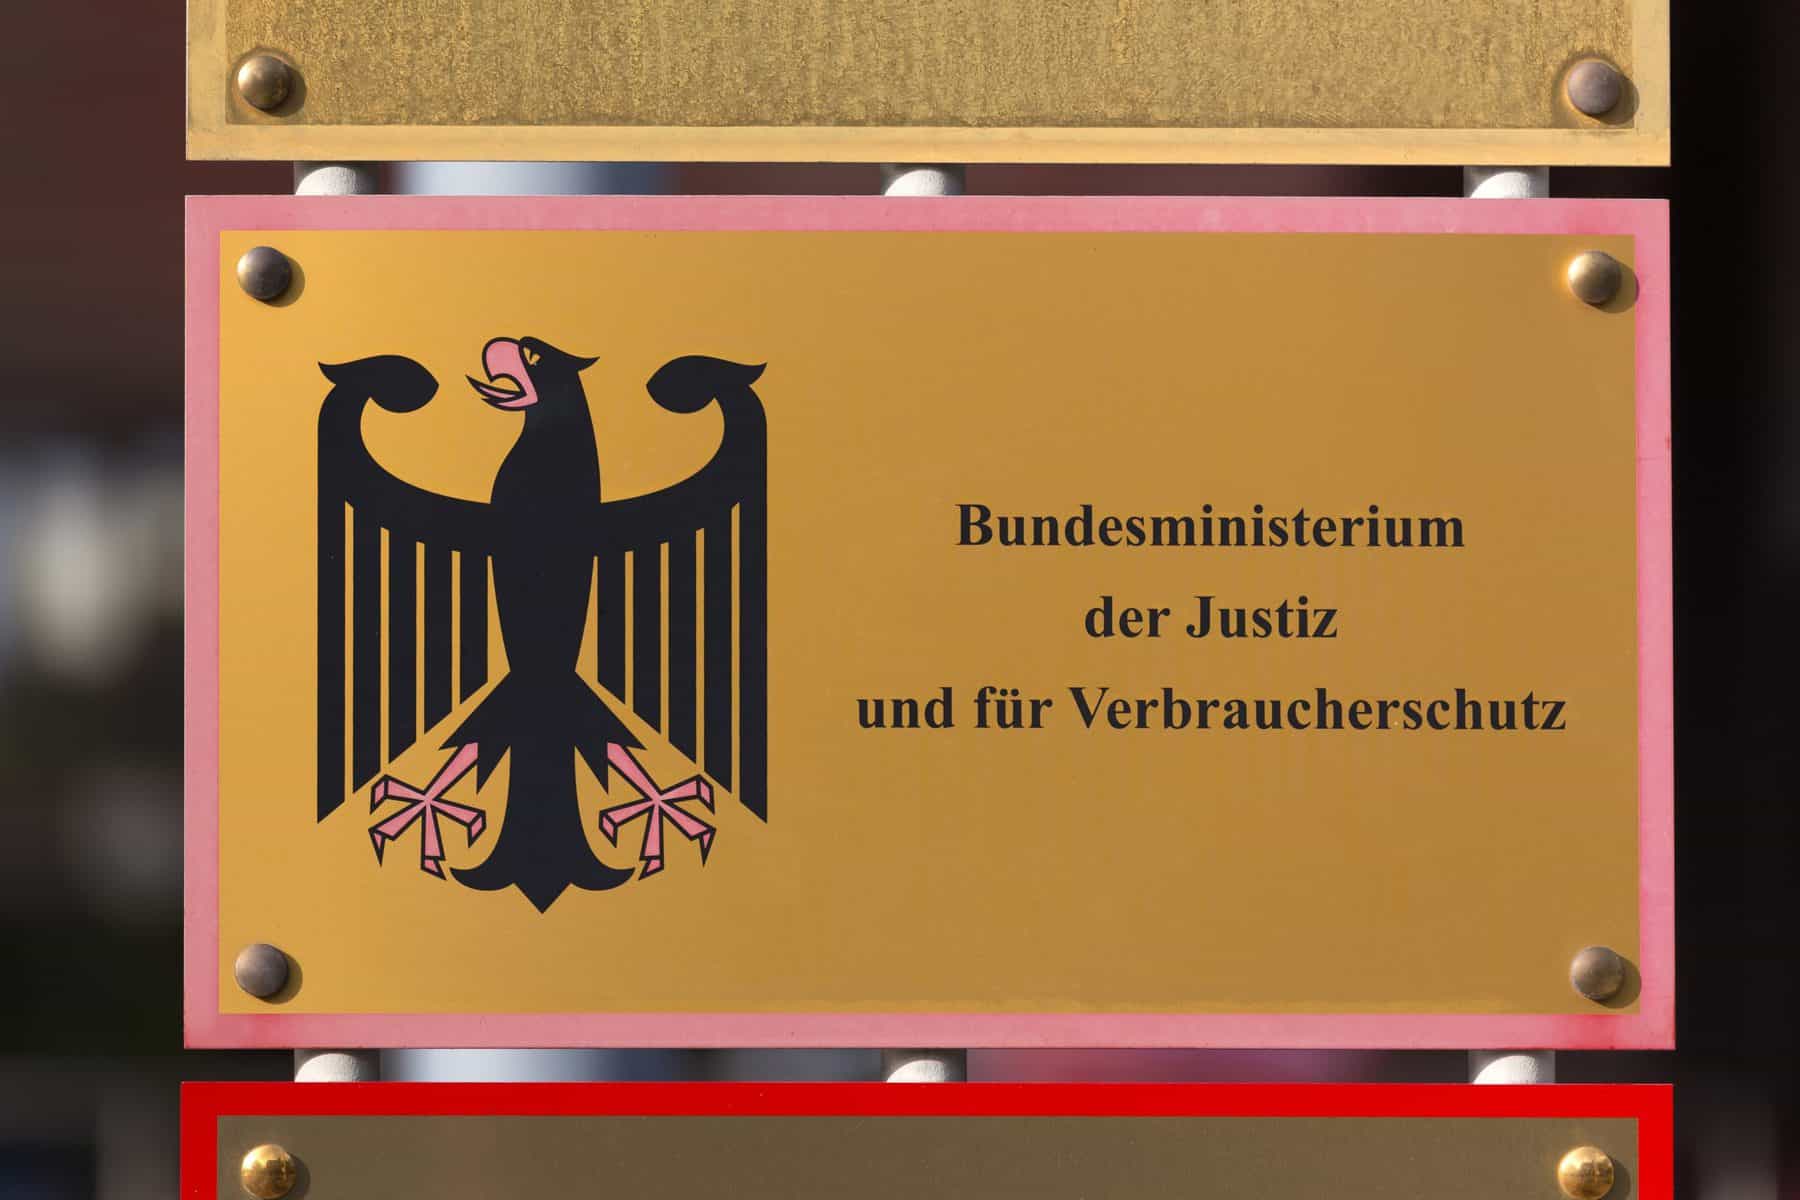 bonn, North Rhine-Westphalia/germany – 19 10 18: german Federal Ministry of Justice sign in Bonn germany